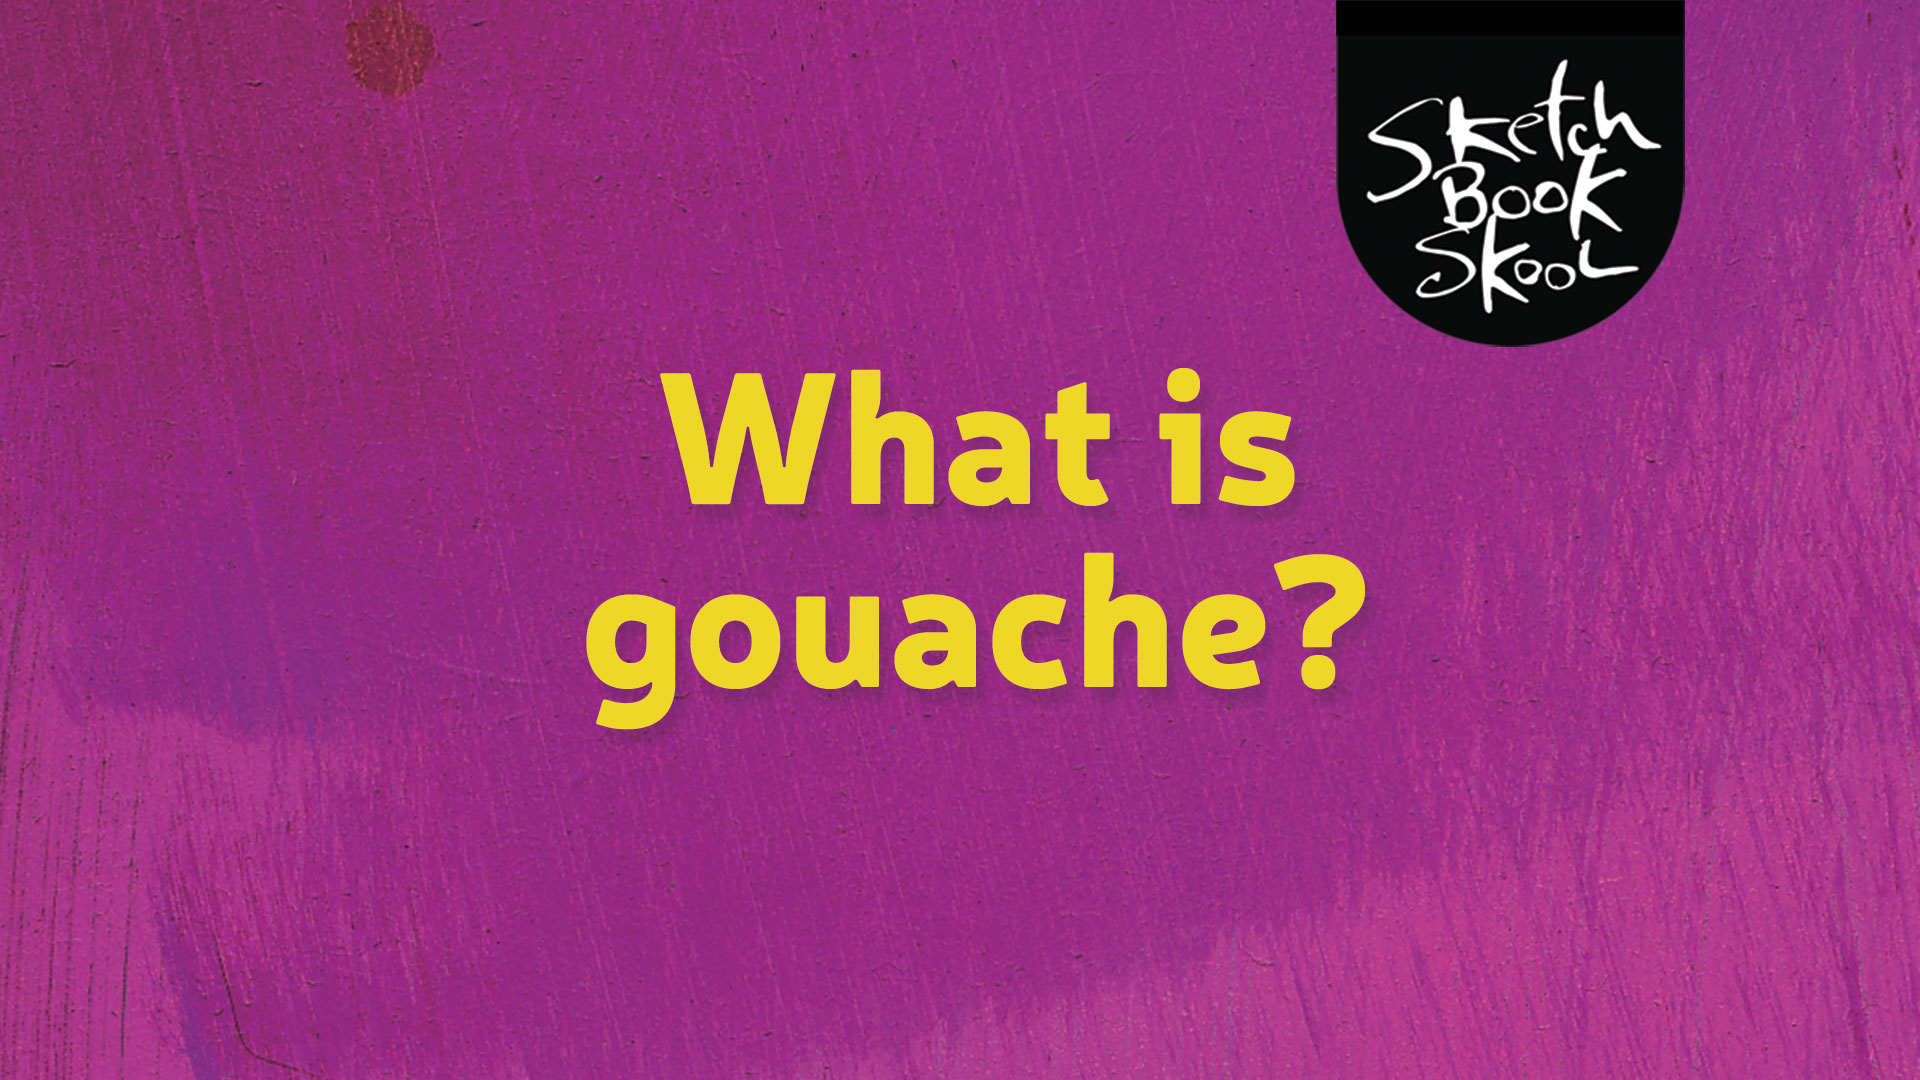 About gouache